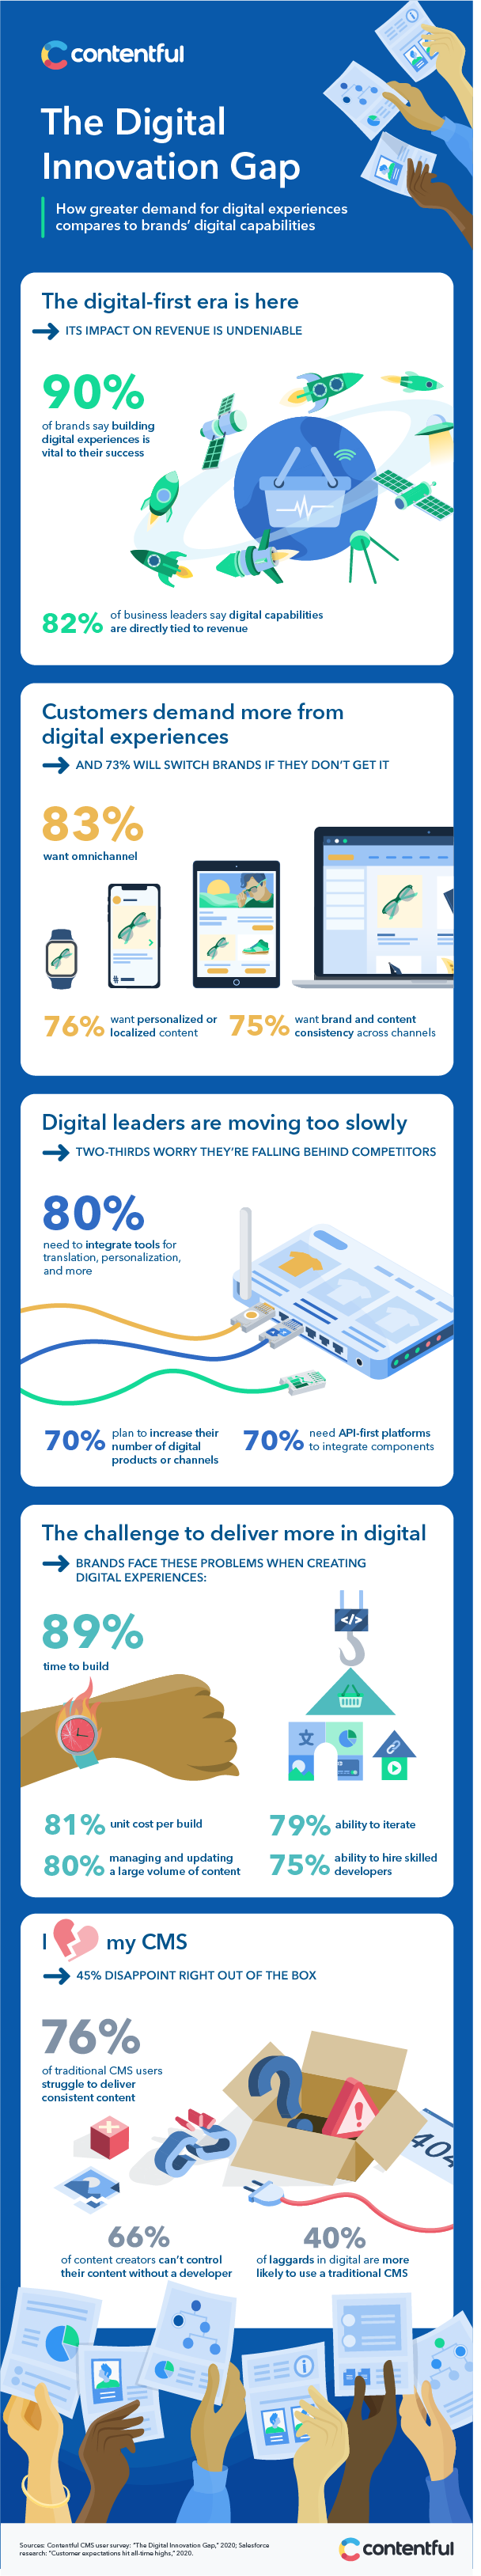 The Digital Innovation Gap infographic